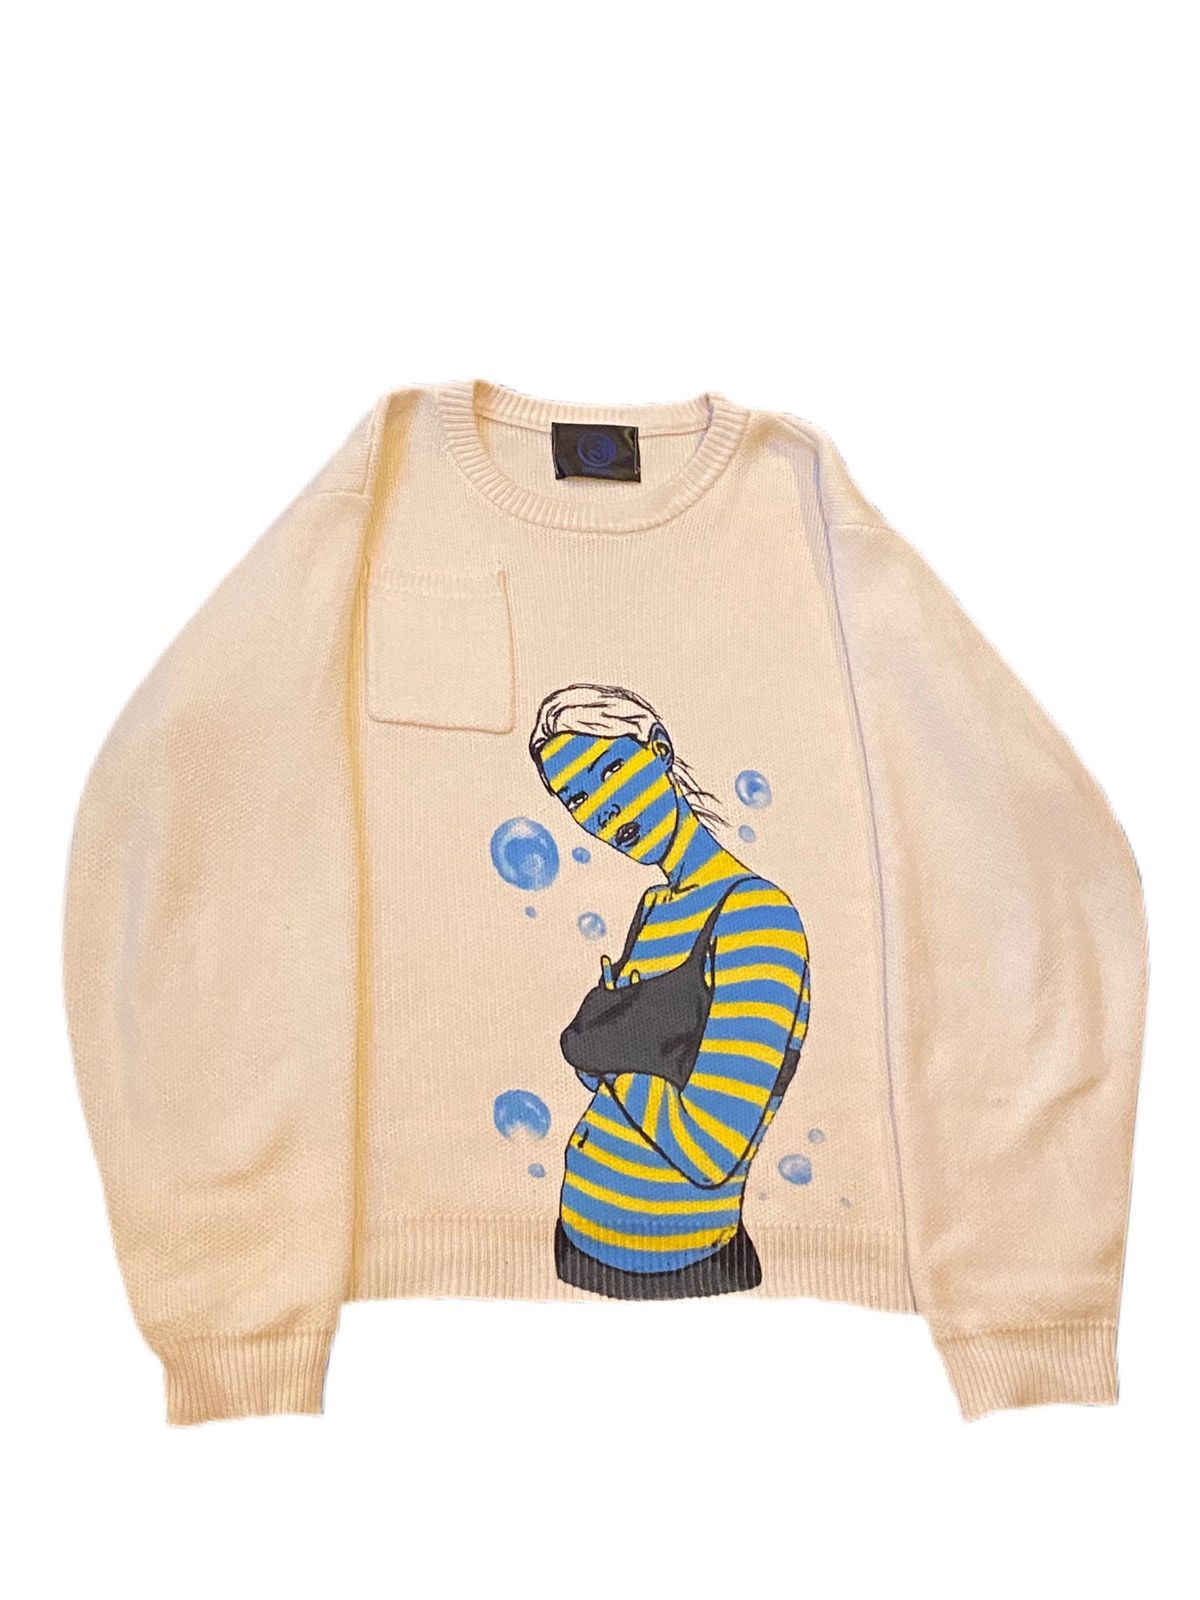 Japanese Brand Nightclub X Indigöu Kate Moss Knit Sweater | Grailed